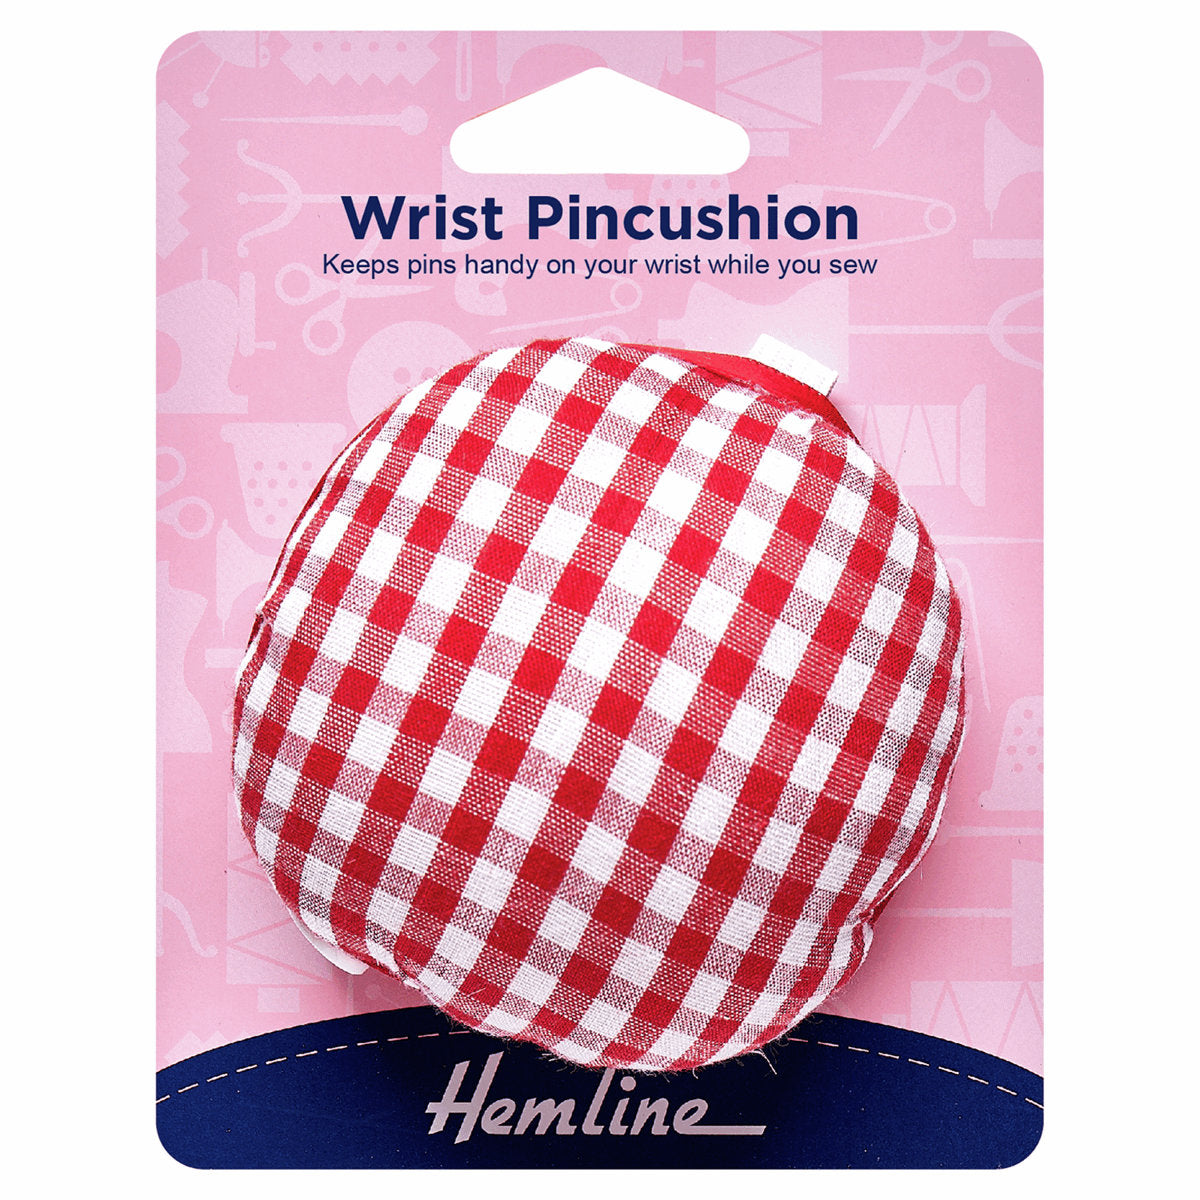 Wrist Pincushion pin cushion. Great sewing pincushion gift. Hemline.